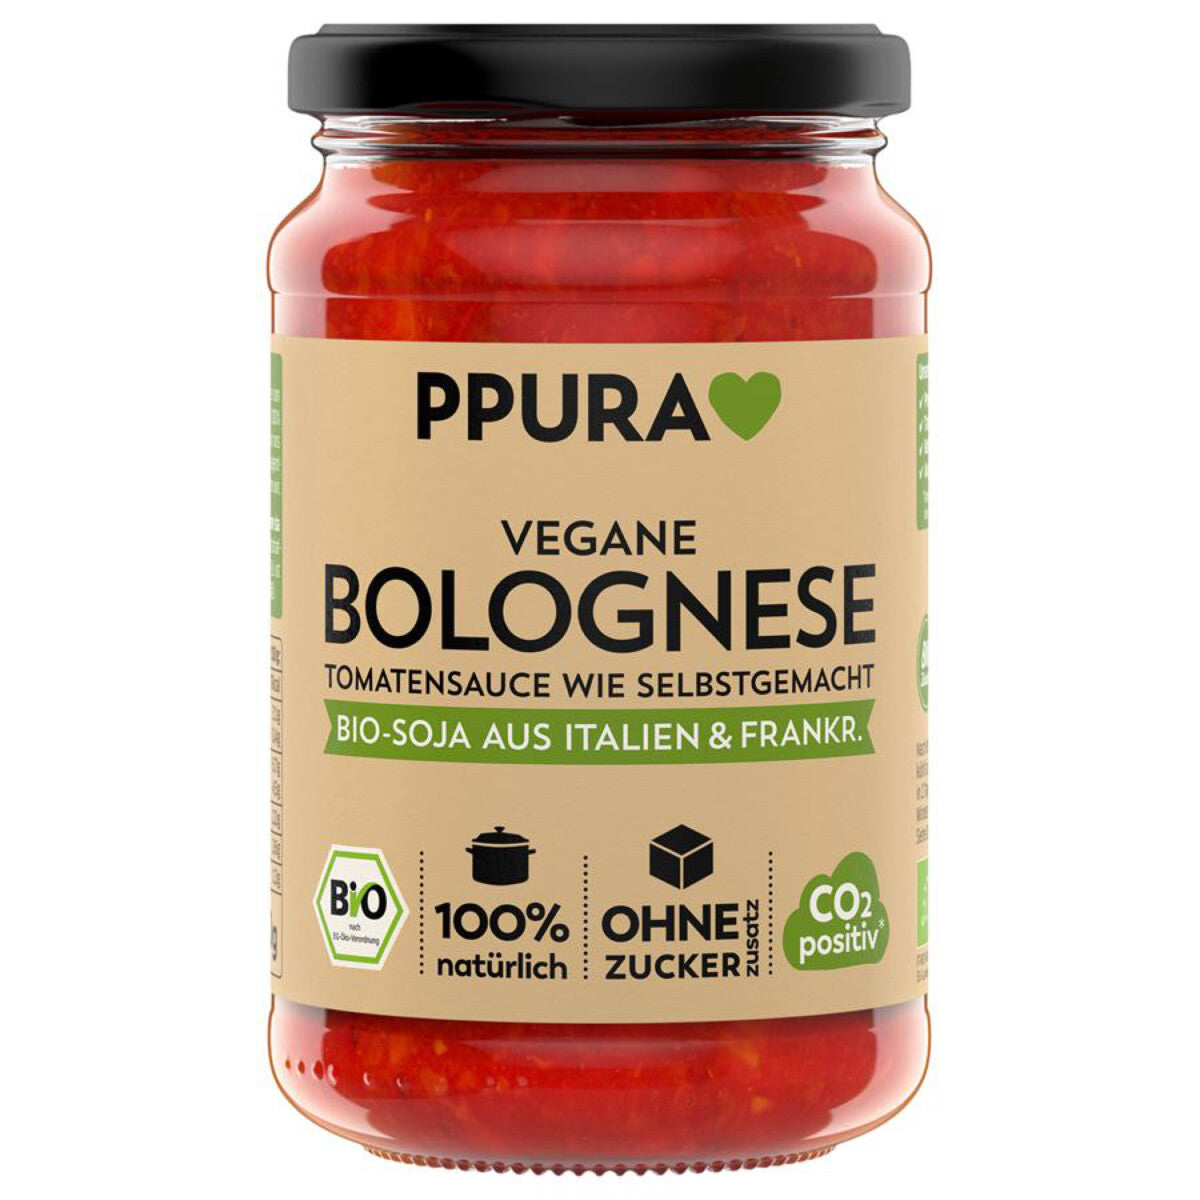 PPURA Sugo vegane Bolognese mit Soja - 340 g